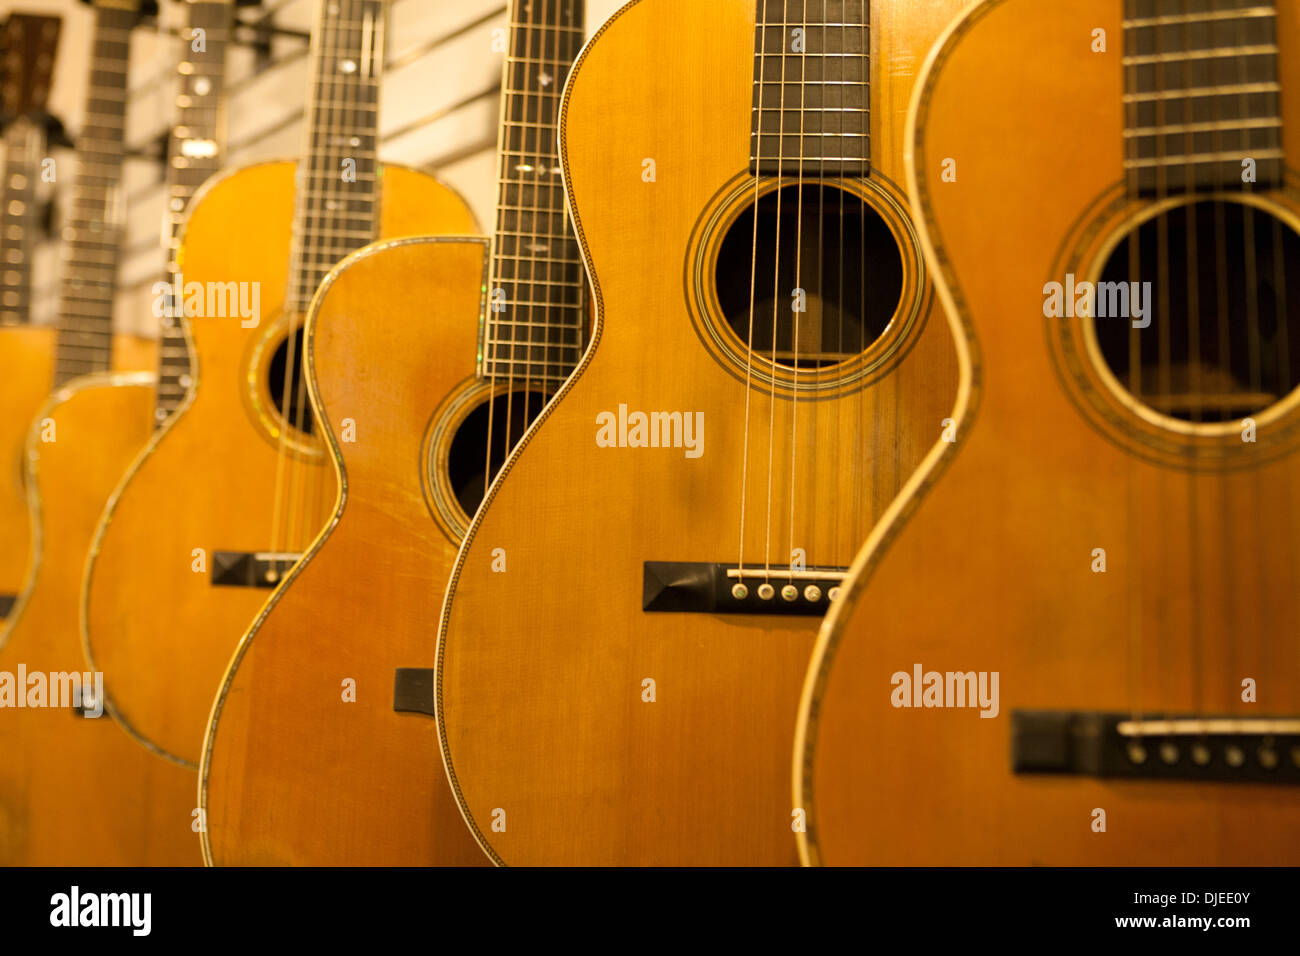 Guitarras de juguete fotografías e imágenes de alta resolución - Alamy